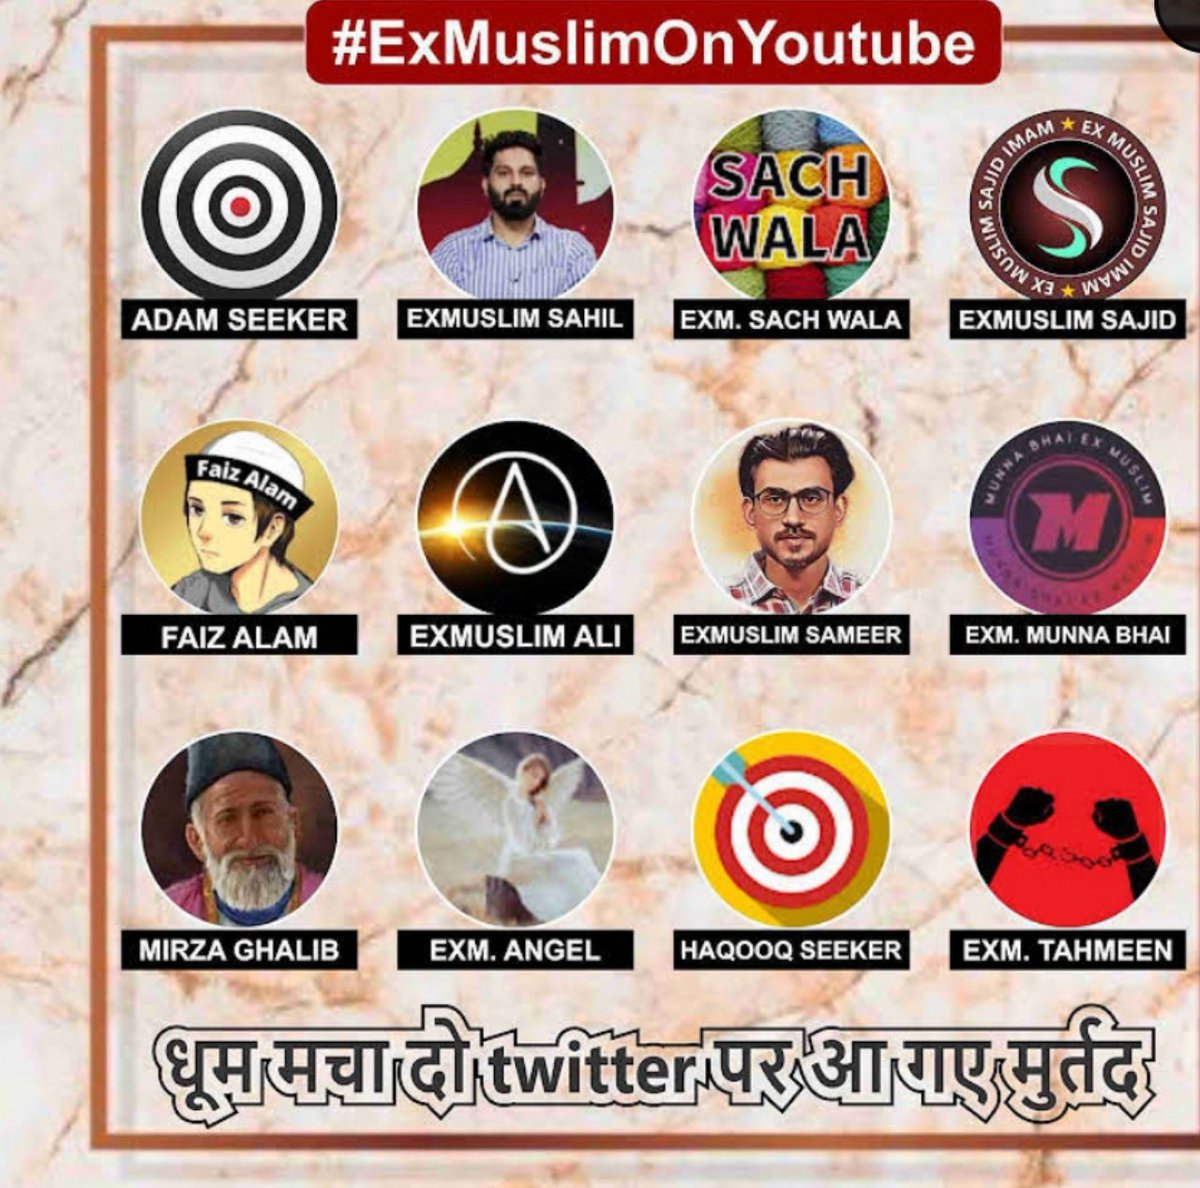 @zahacktanvir #ExMuslim
#ExMuslimOnYoutube 
Women Empowerment feat. Sharia